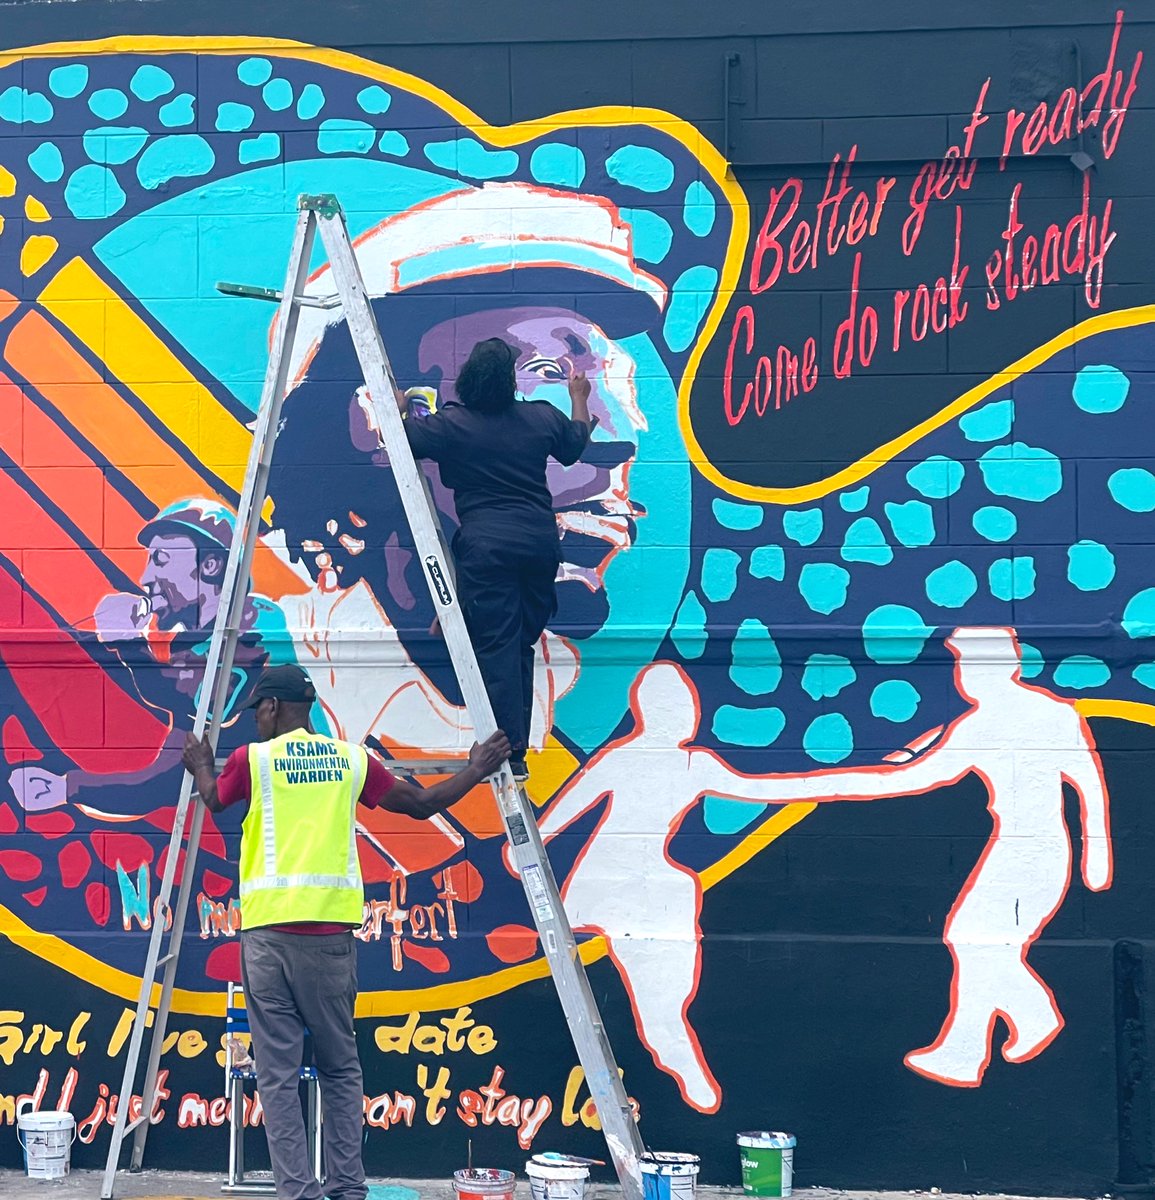 The great Alton Ellis!

@MayorWilliamsJA transforming downtown Kingston, one Mural at a time 👏🏼

Mural Artistry by Kristina Rowe

#StillBelieving
#DowntownKingston
#KingstonCity
#WorkinProgress